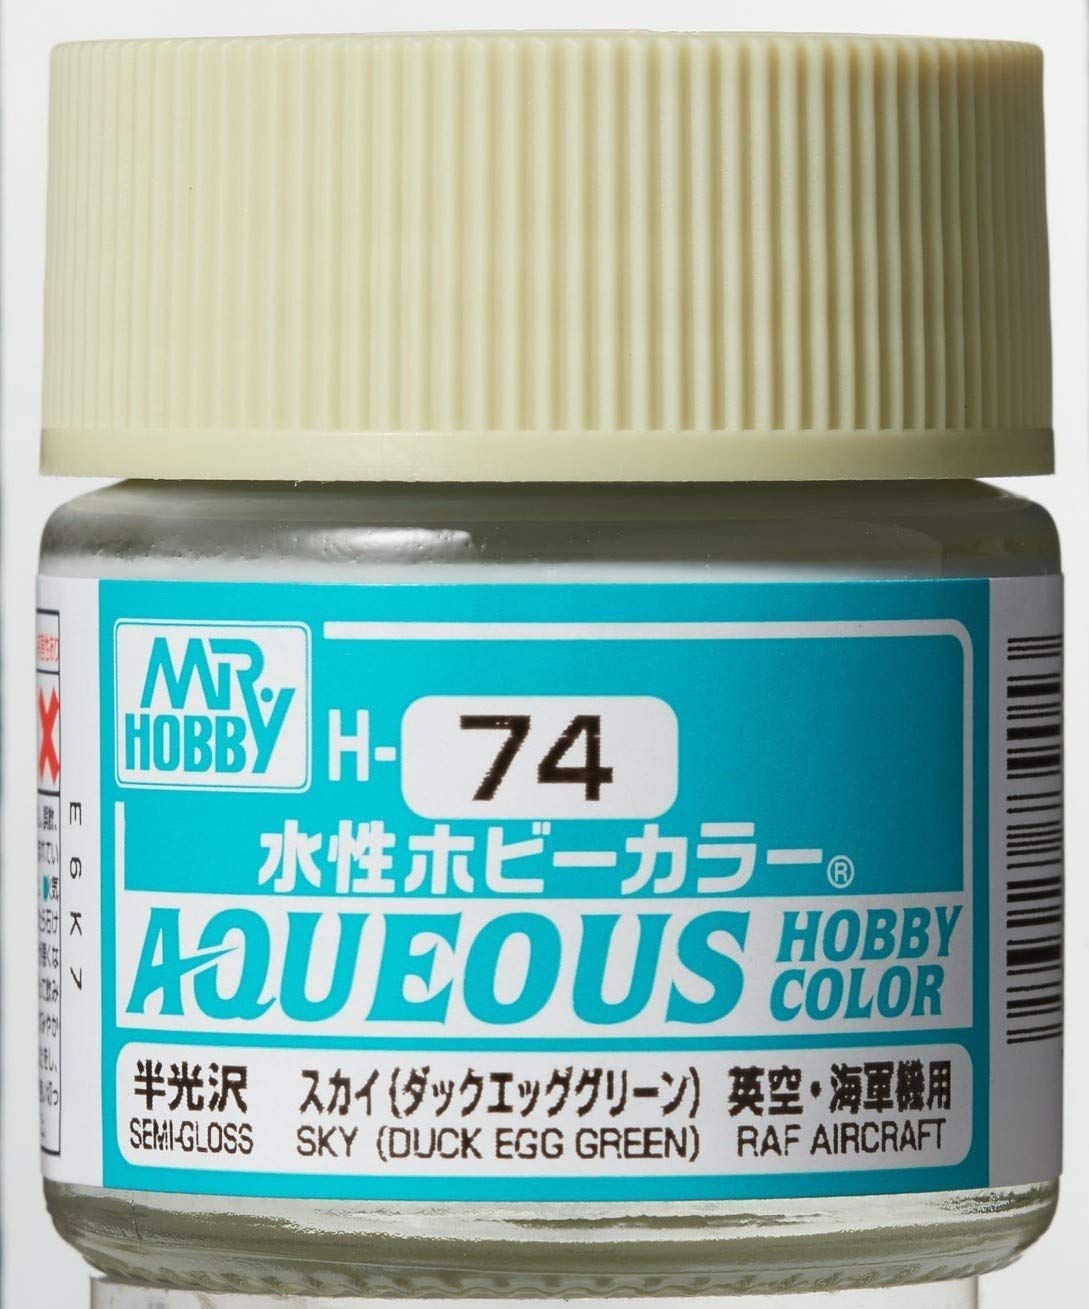 Mr. Hobby Aqueous Hobby Color H74 Semi-Gloss Sky (Duck Egg Green) 10ml Bottle